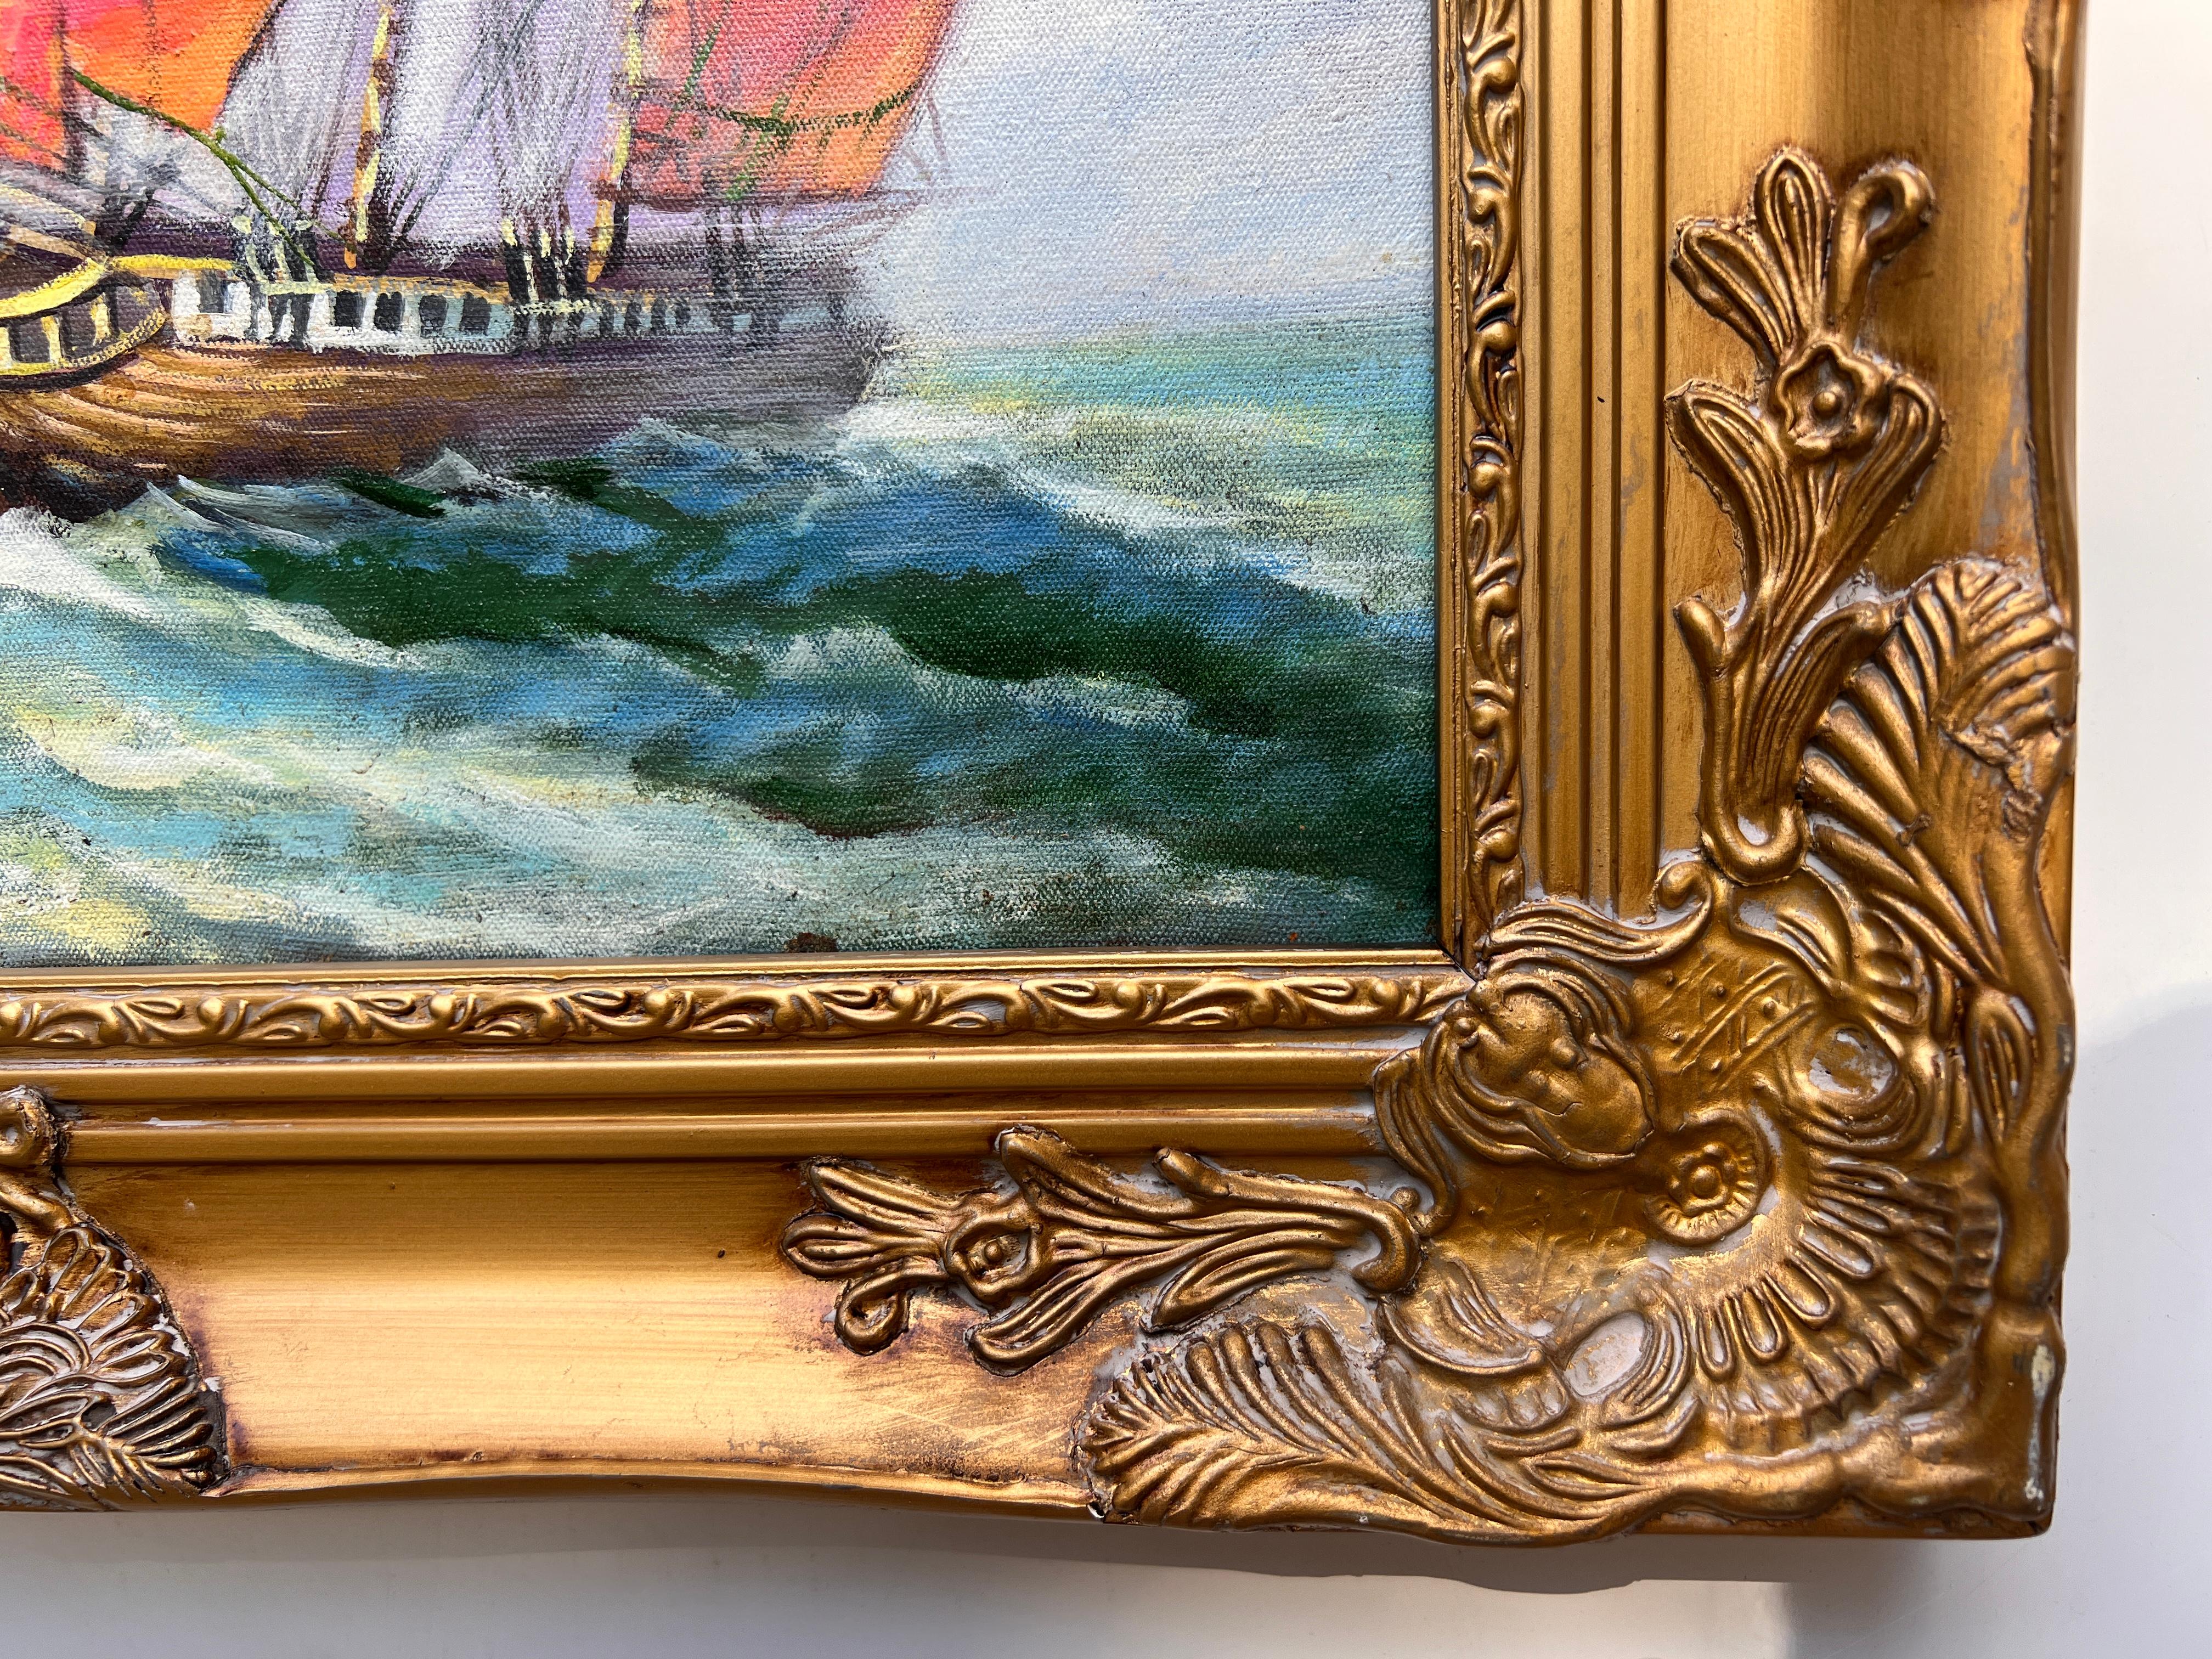 Artist Dobritsin Oil painting on canvas, seascape, Sailing ship, Framed For Sale 2